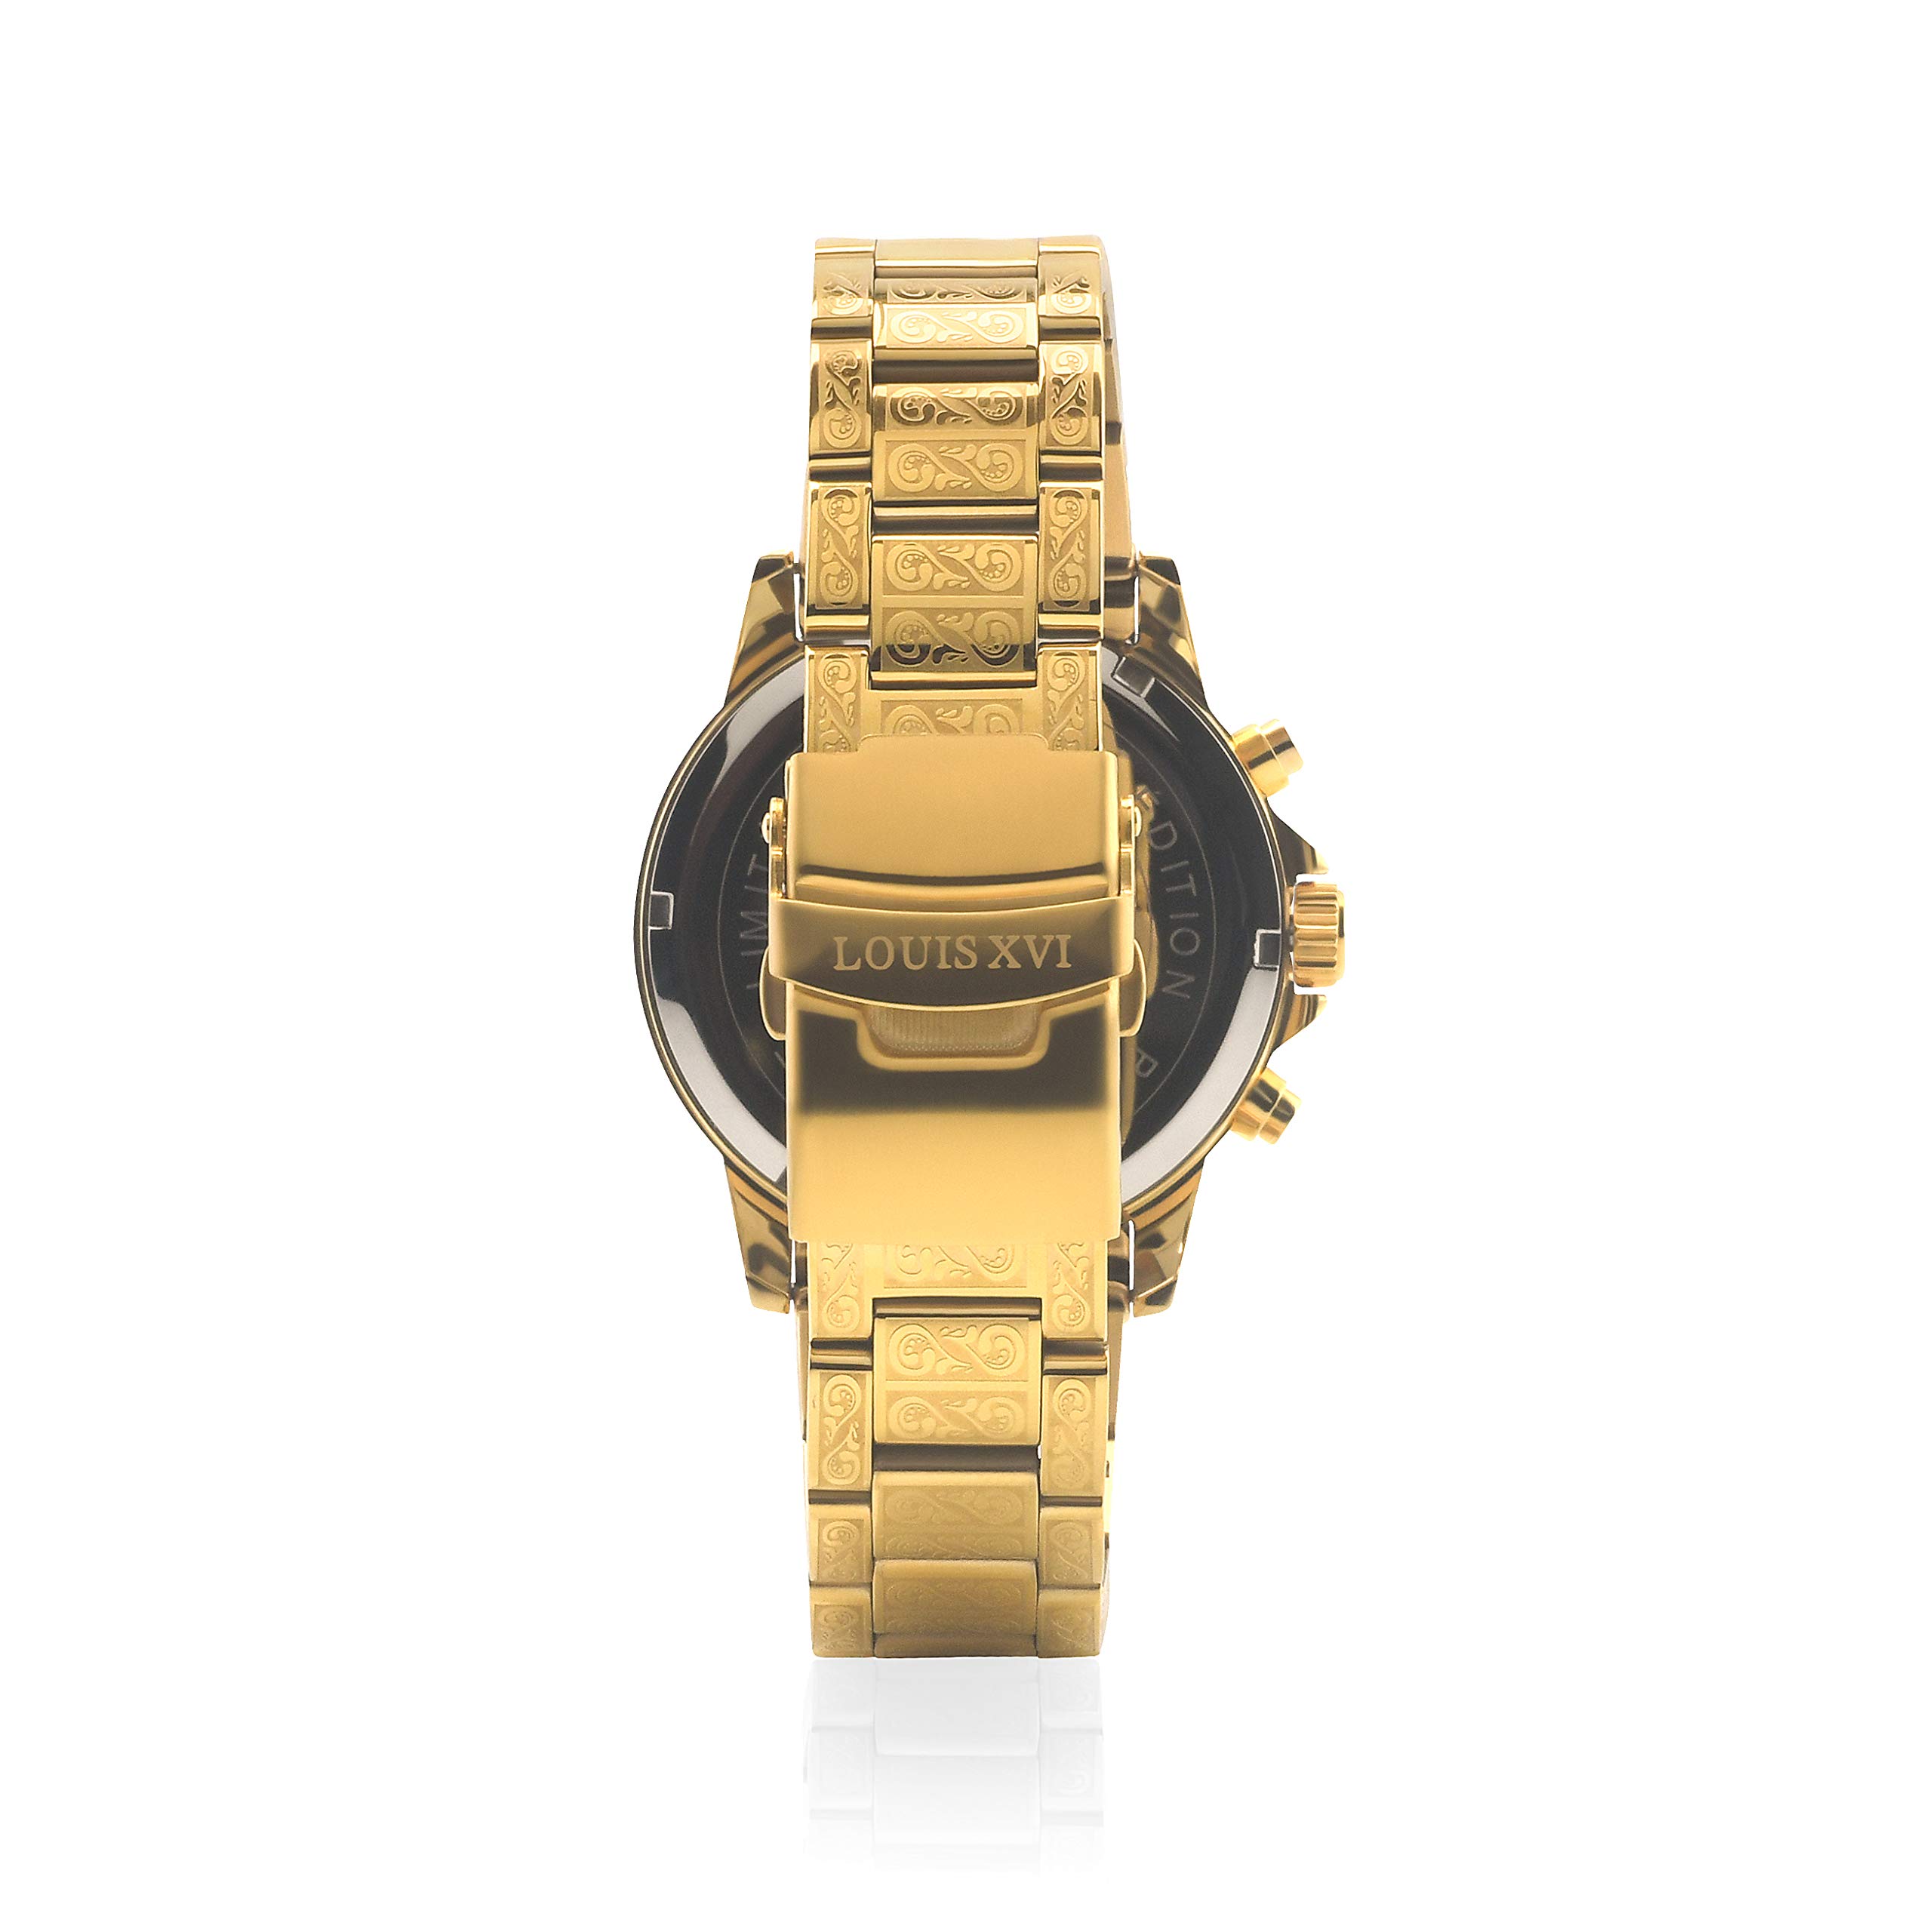 LOUIS XVI Herren-Armbanduhr Palais Royale Stahlband Gold Schwarz Karbon echte Diamanten Römische Zahlen Chronograph Analog Quarz Edelstahl 1018